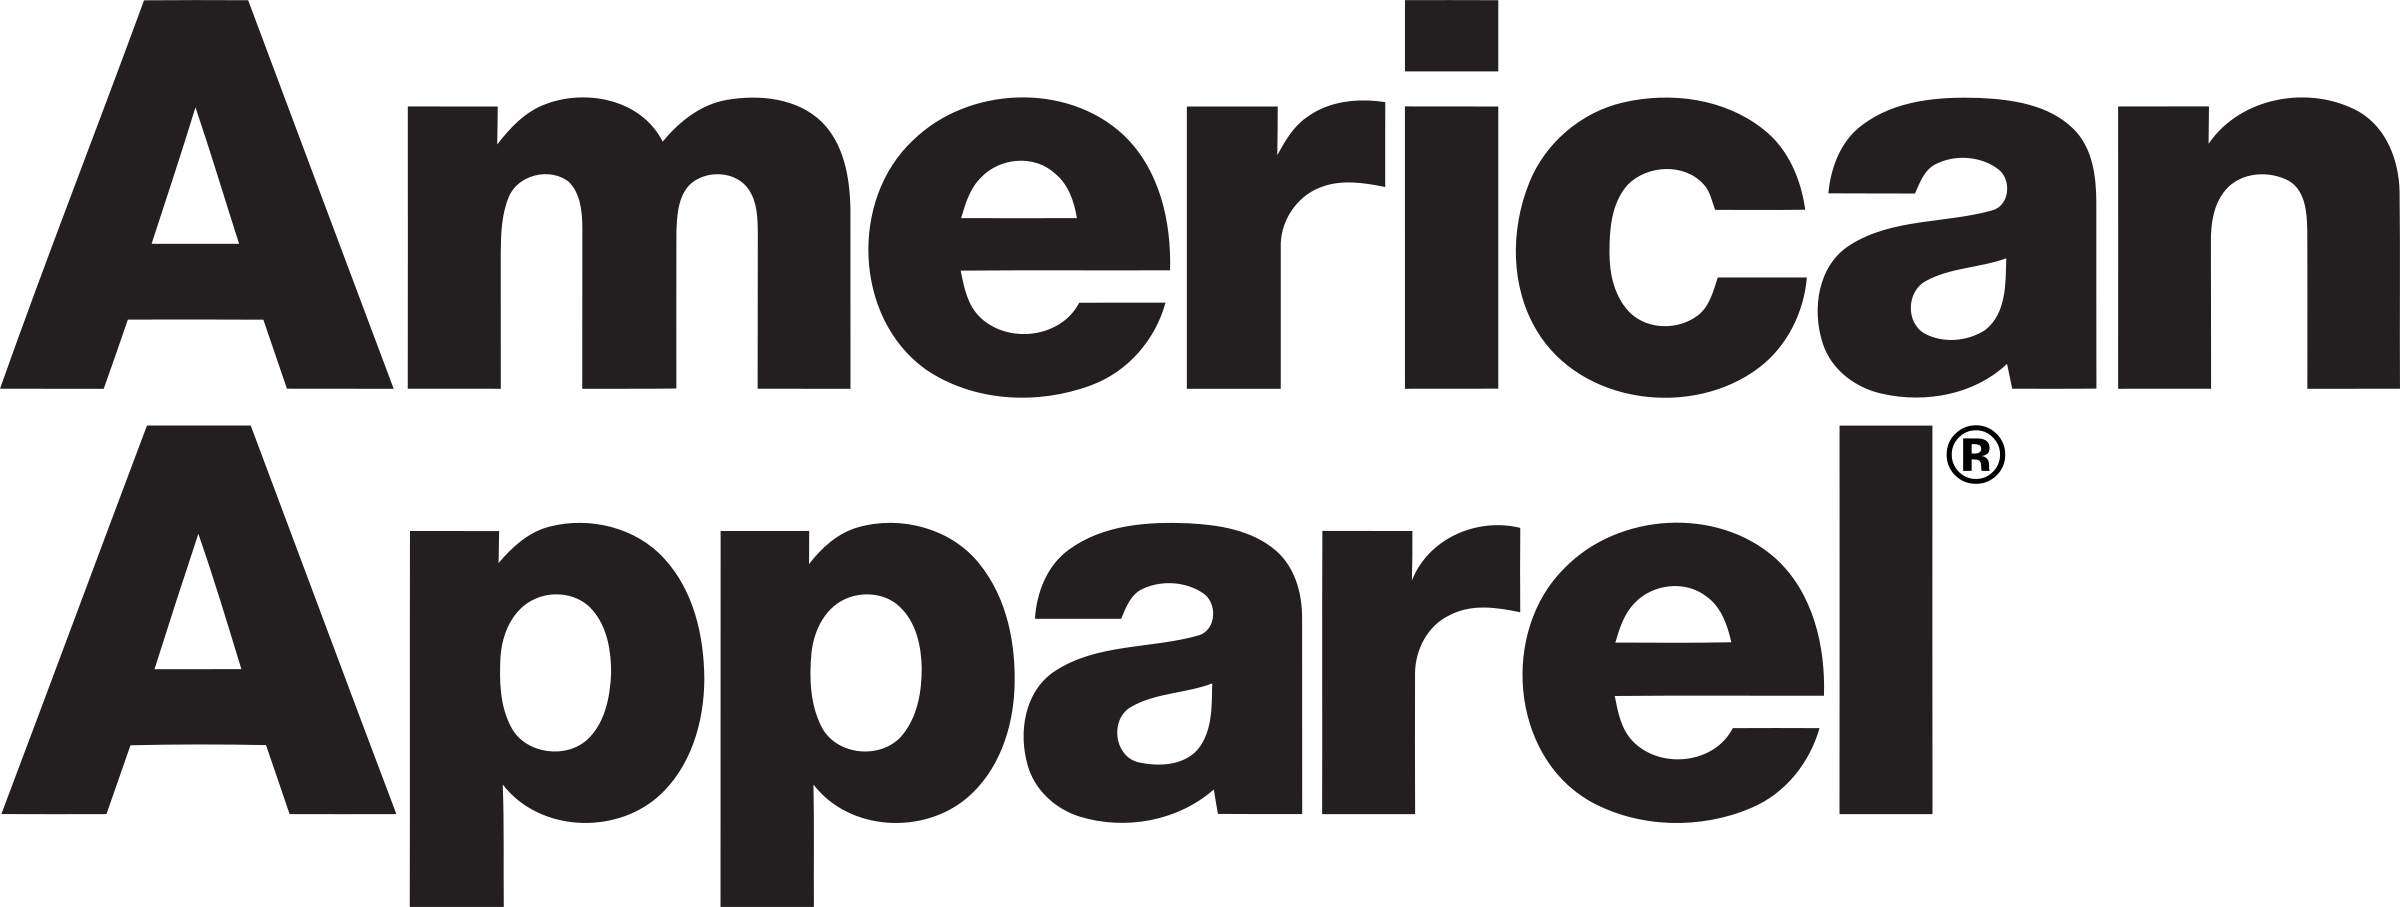 american-apparel-2-logo-png-transparent.png